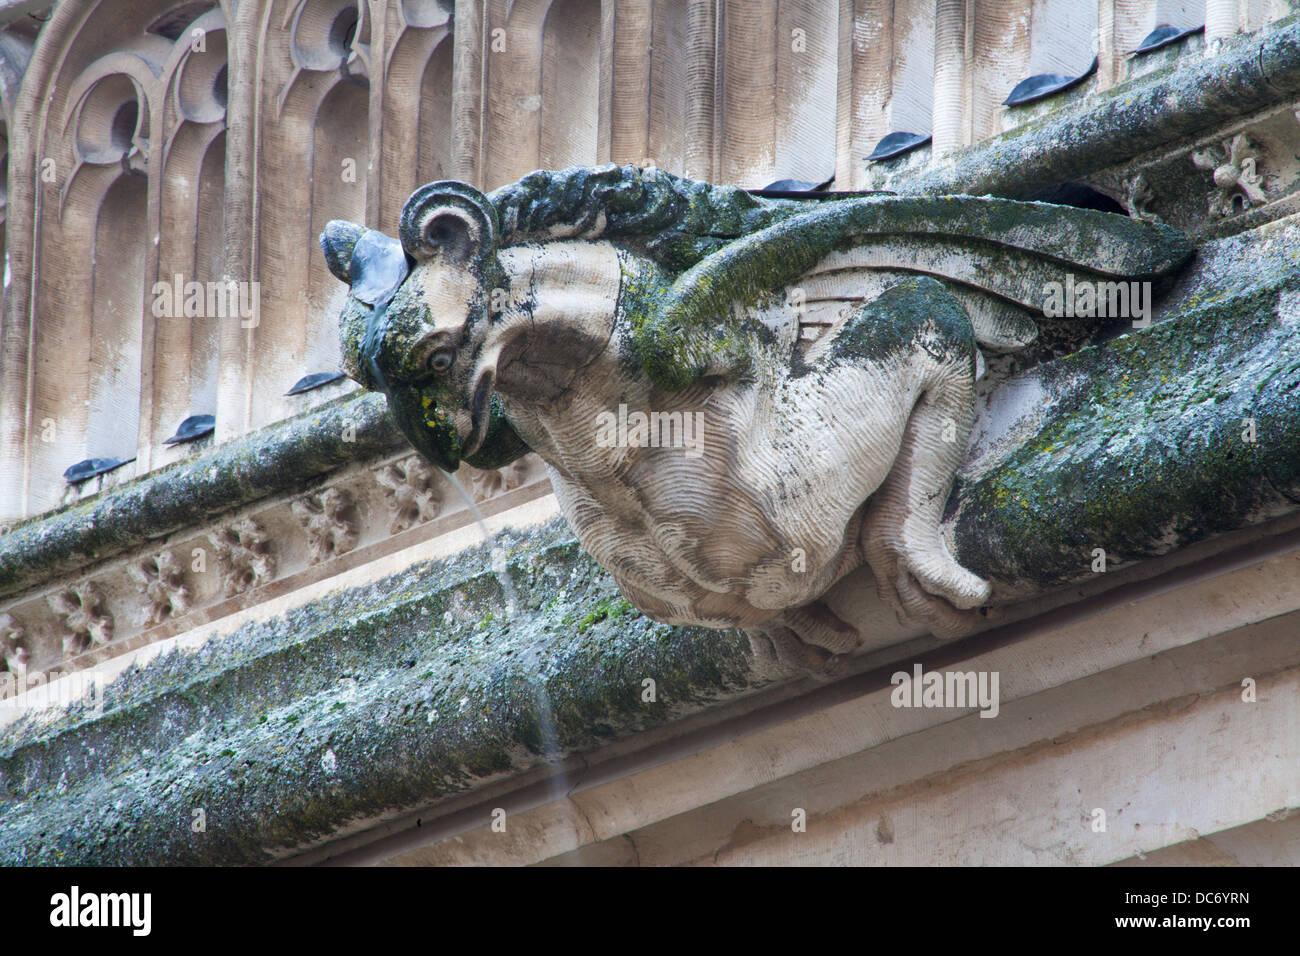 TOLEDO - MARCH 8: Detail of animal as gothic spoutler in rain from atrium of Monasterio de San Juan de los Reyes Stock Photo